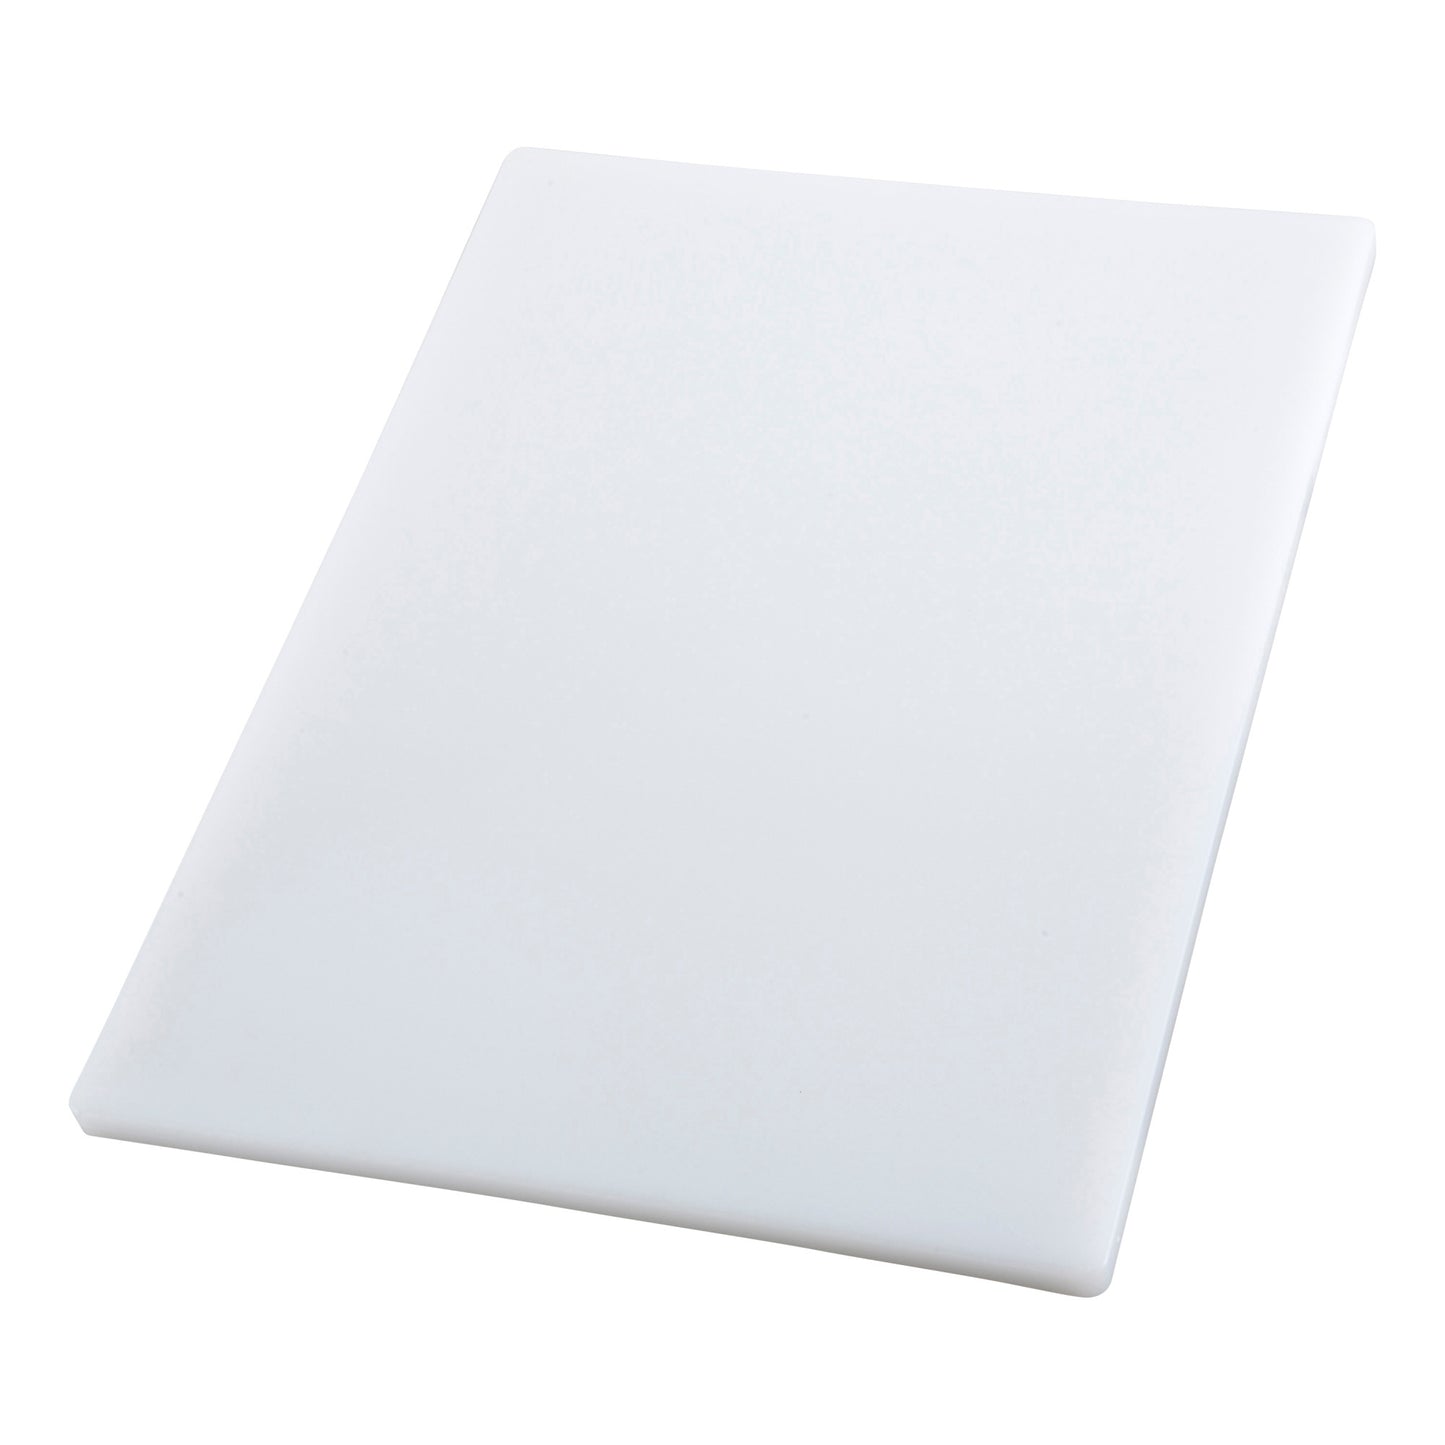 CBH-1520 - White Rectangular Cutting Board - 15" x 20" x 3/4"